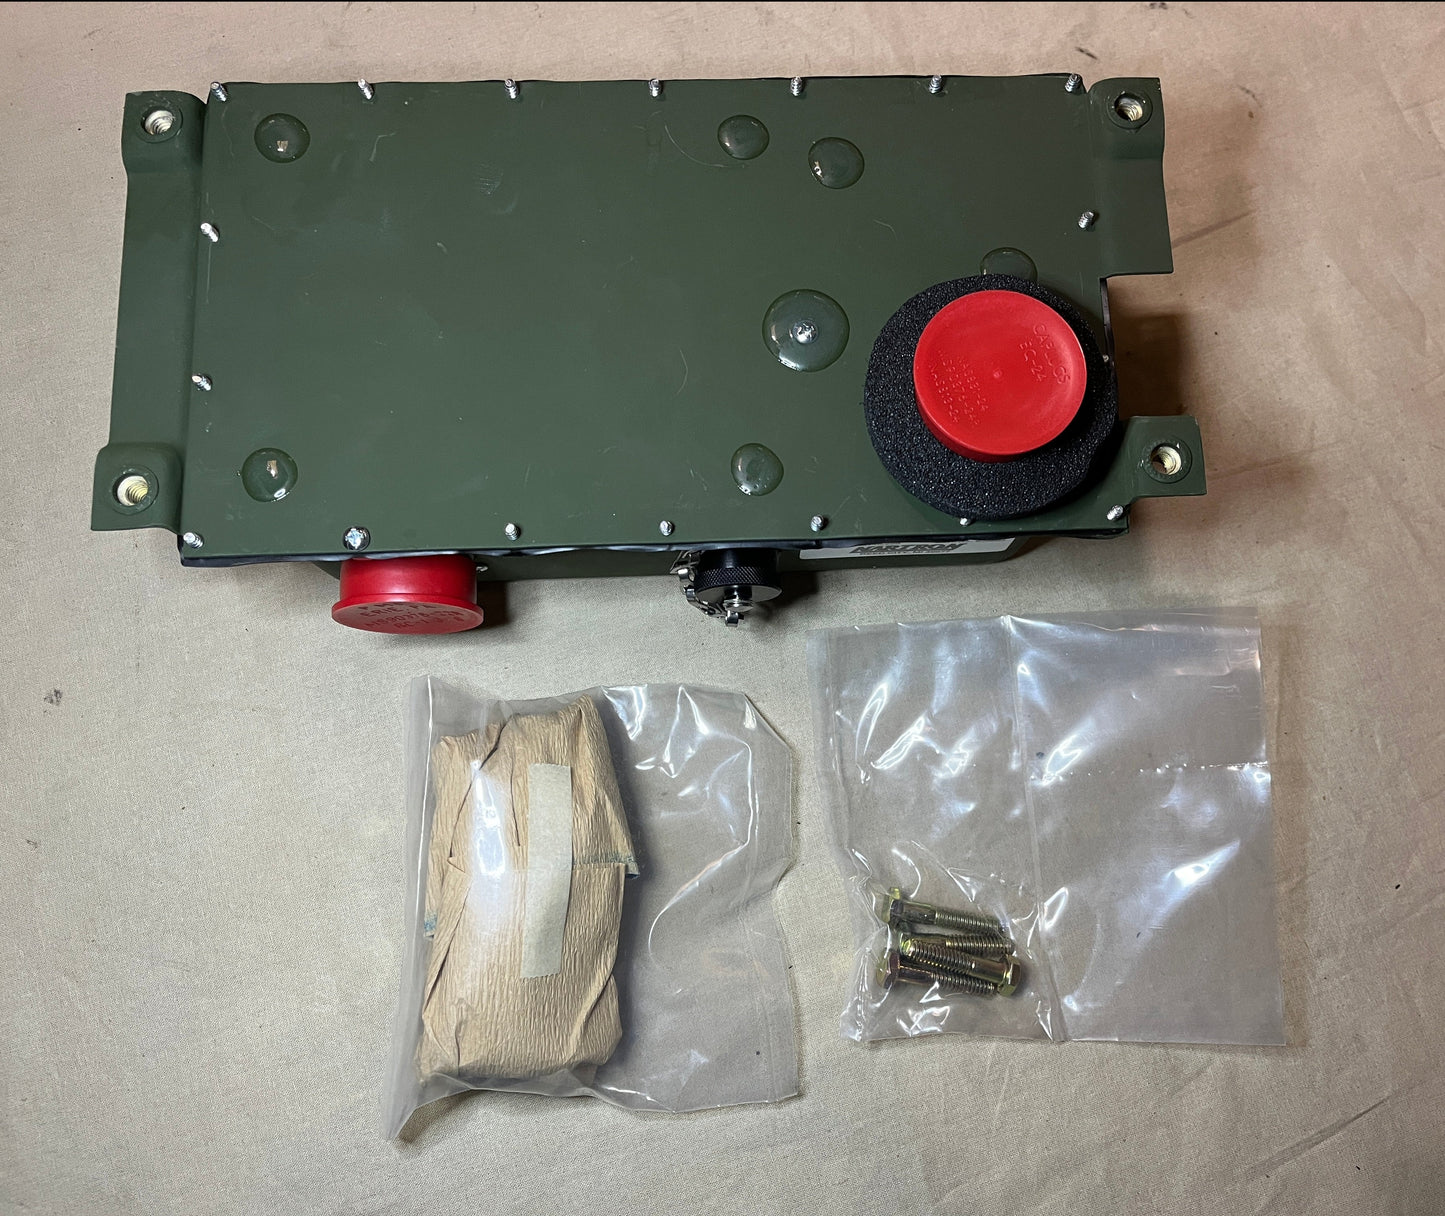 HMMWV Glow Plug Controller & Protective Control Box - Matched Set (KDS Smart Start System)